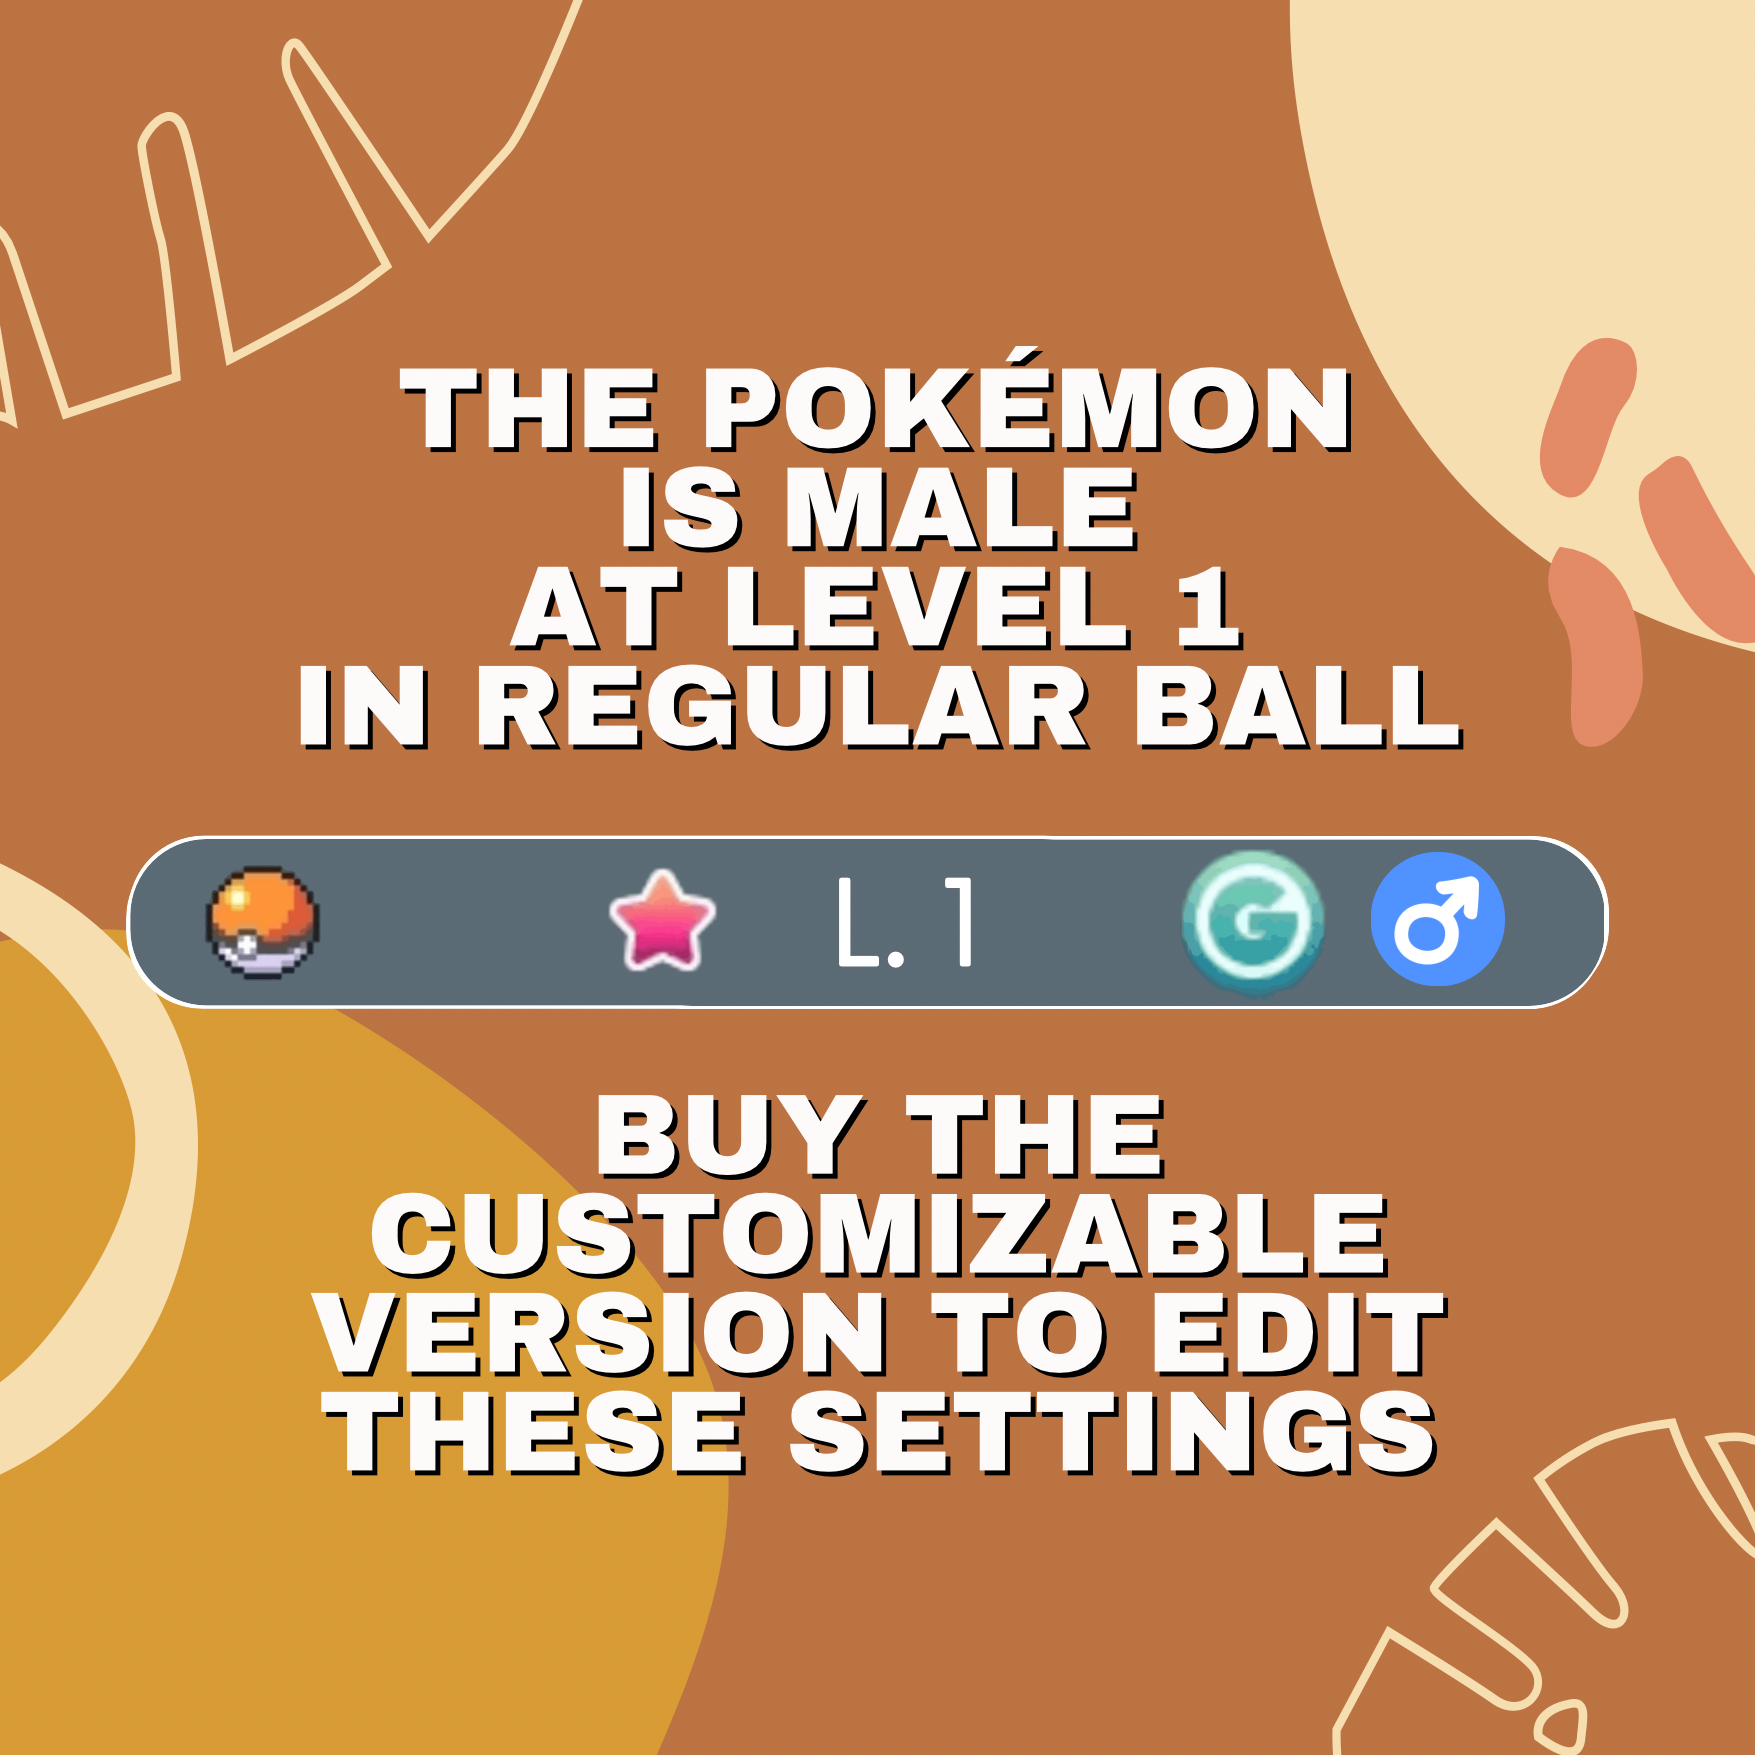 Clefairy Shiny ✨ or Non Shiny Pokémon Let's Go Pikachu Eevee Level 1 Legit 6 IV 100% Legal from GO Park Customizable Custom OT by Shiny Living Dex | Shiny Living Dex